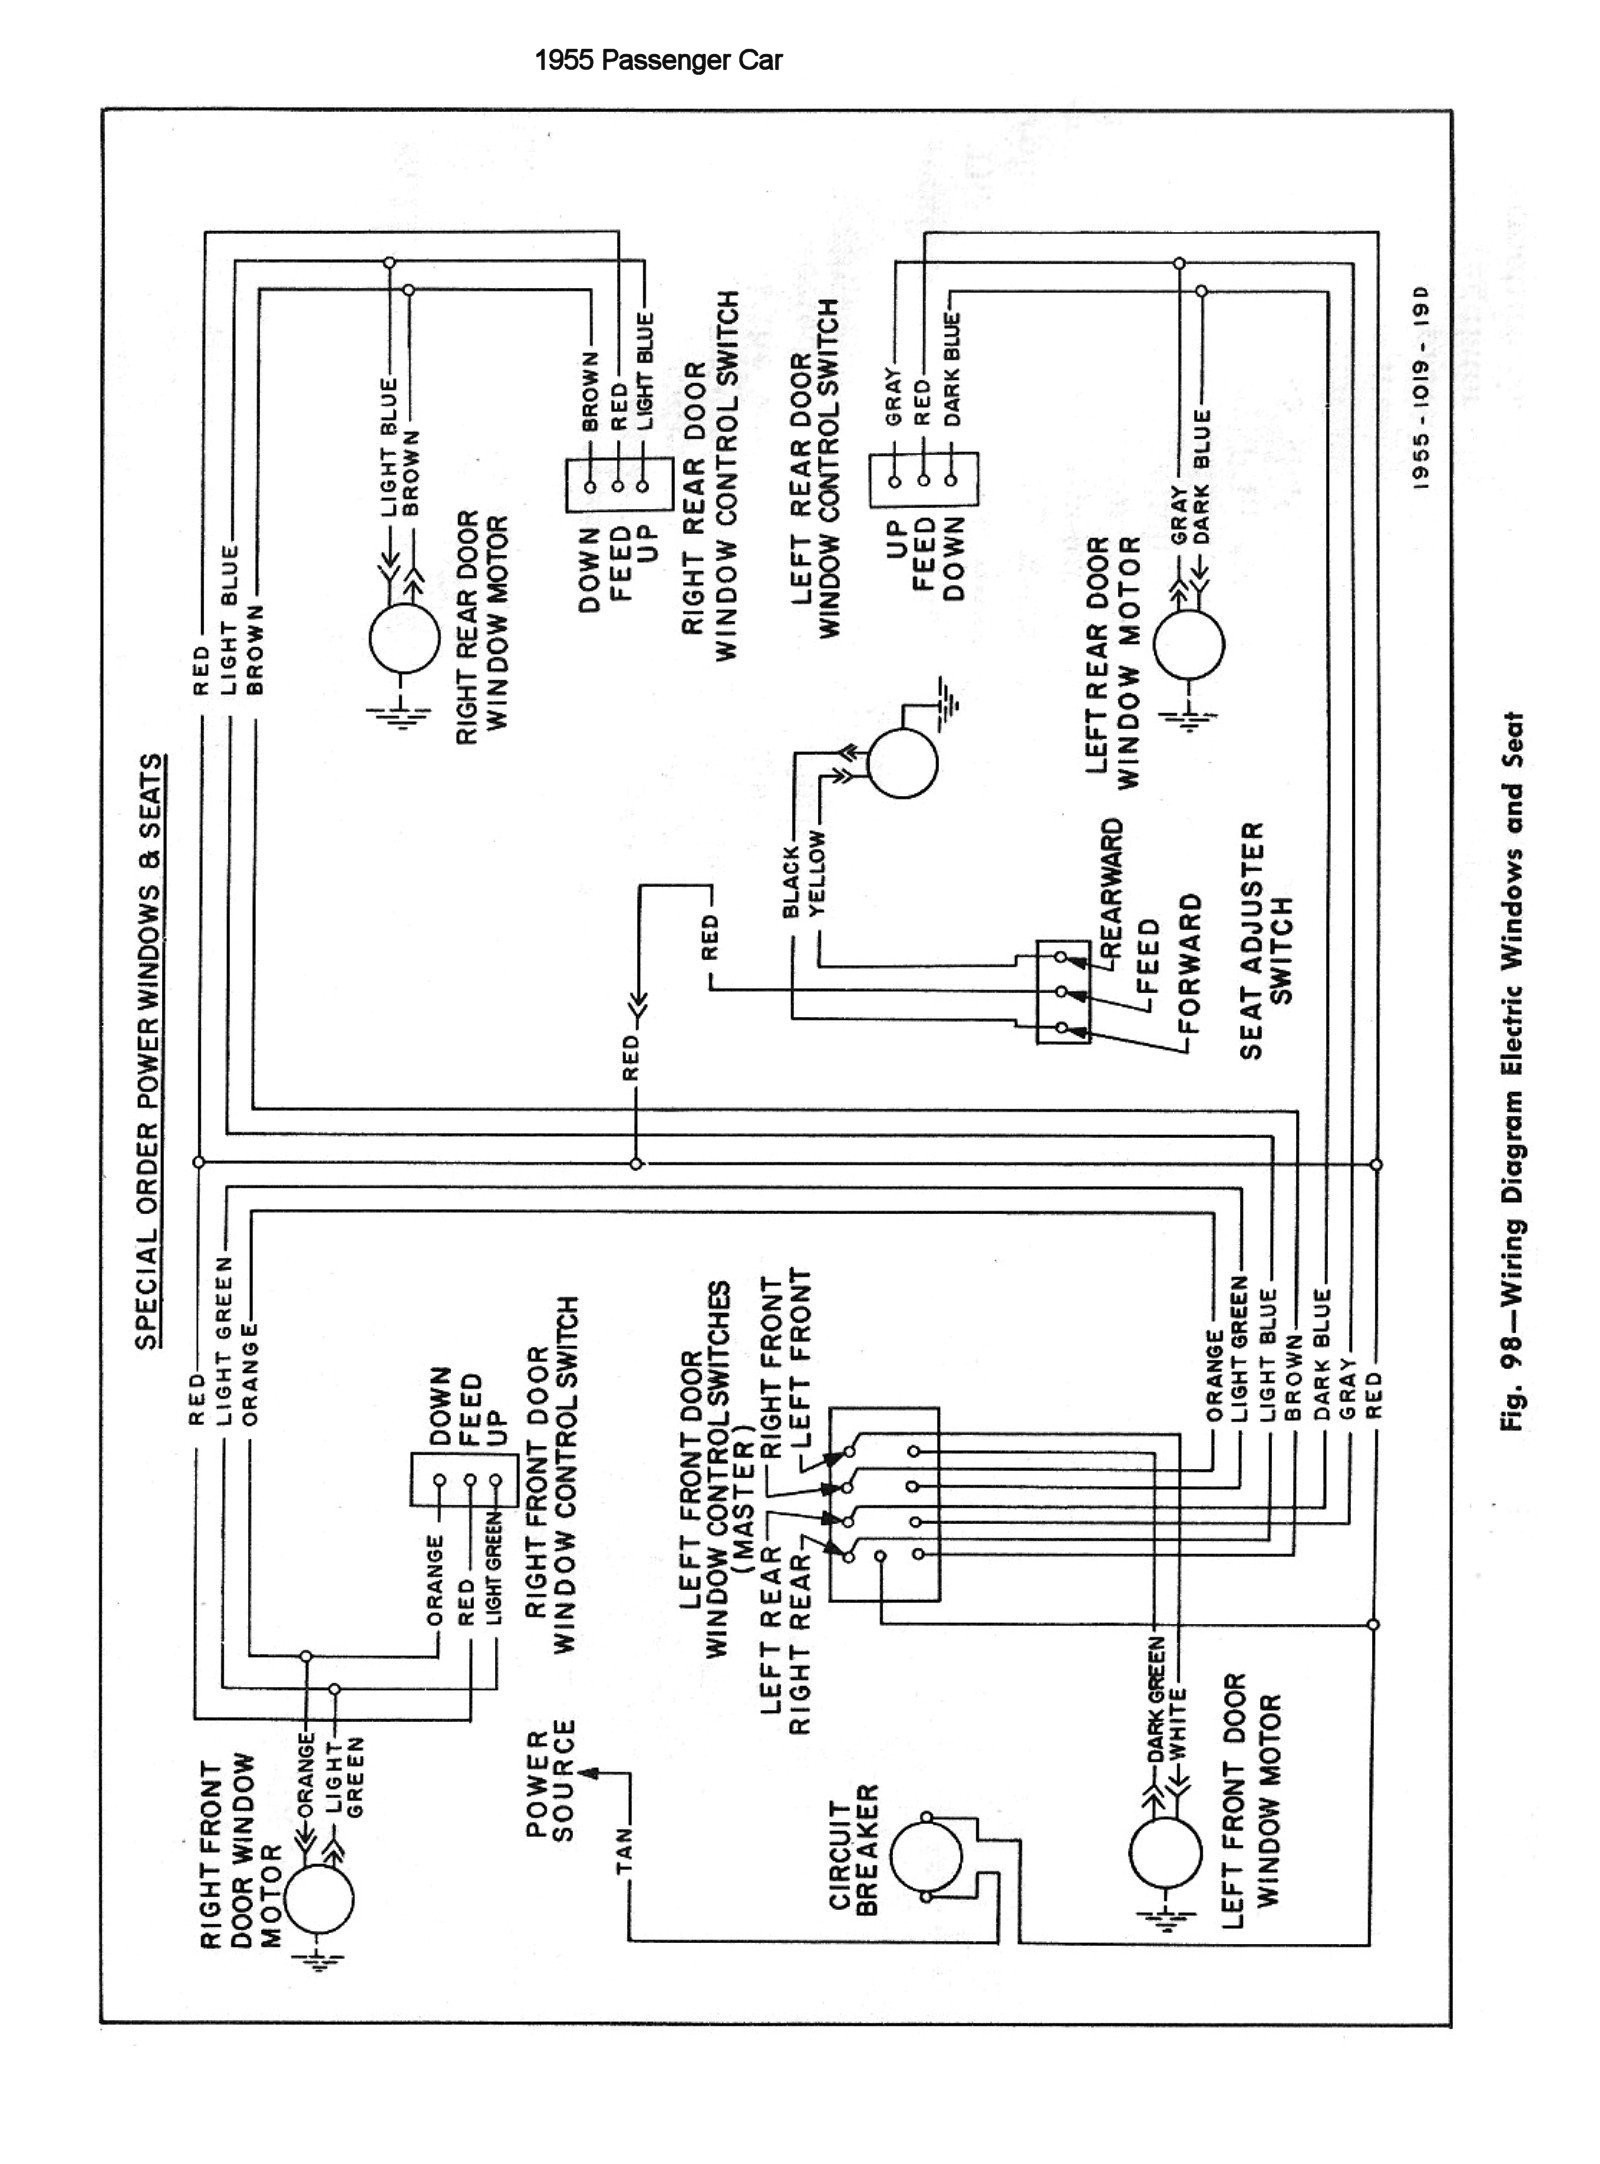 86 Chevy Truck Wiring Diagram Elegant 1993 Chevy Silverado Wiring Diagram Diagram Of 86 Chevy Truck Wiring Diagram